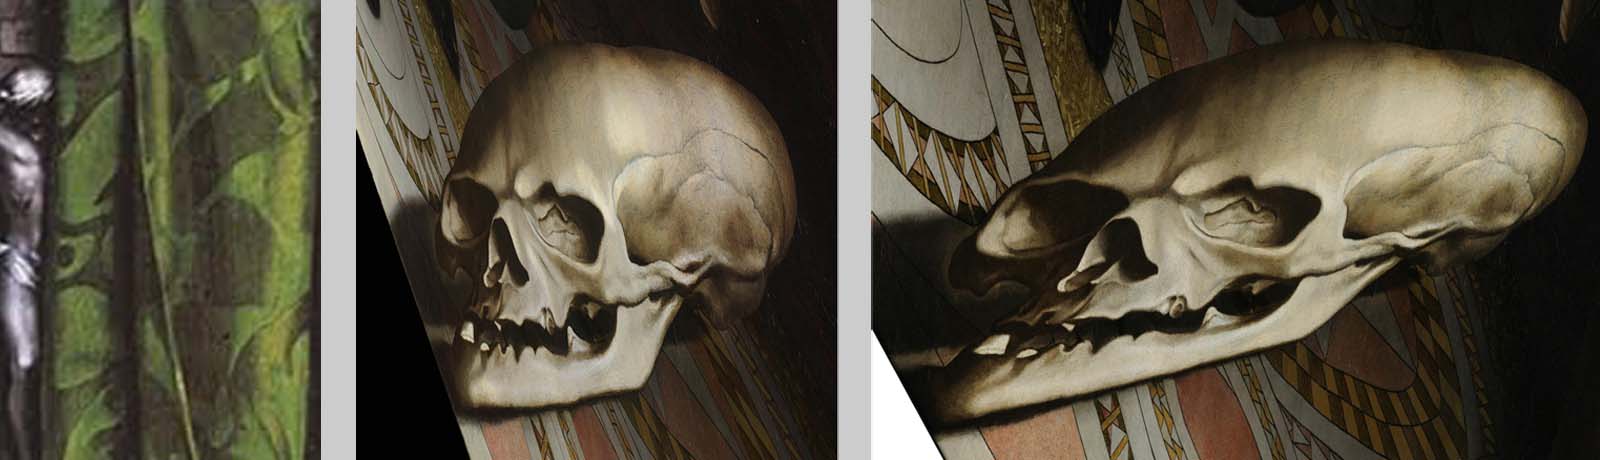 skull and crusafix